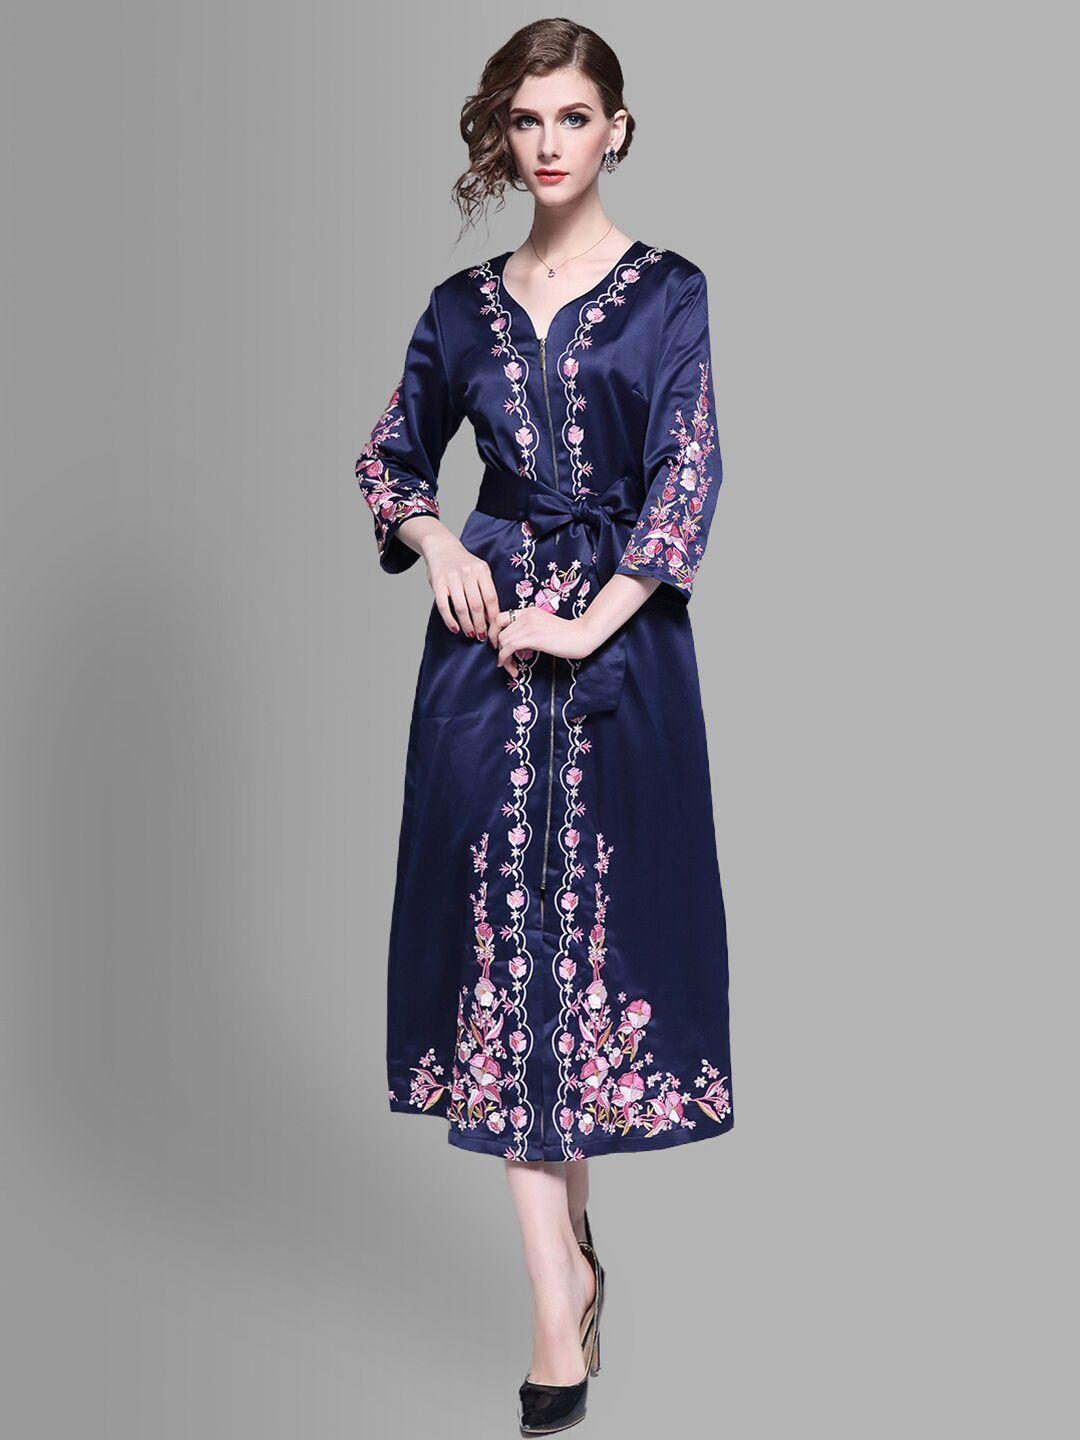 jc-collection-navy-blue-ethnic-motifs-ethnic-a-line-midi-dress